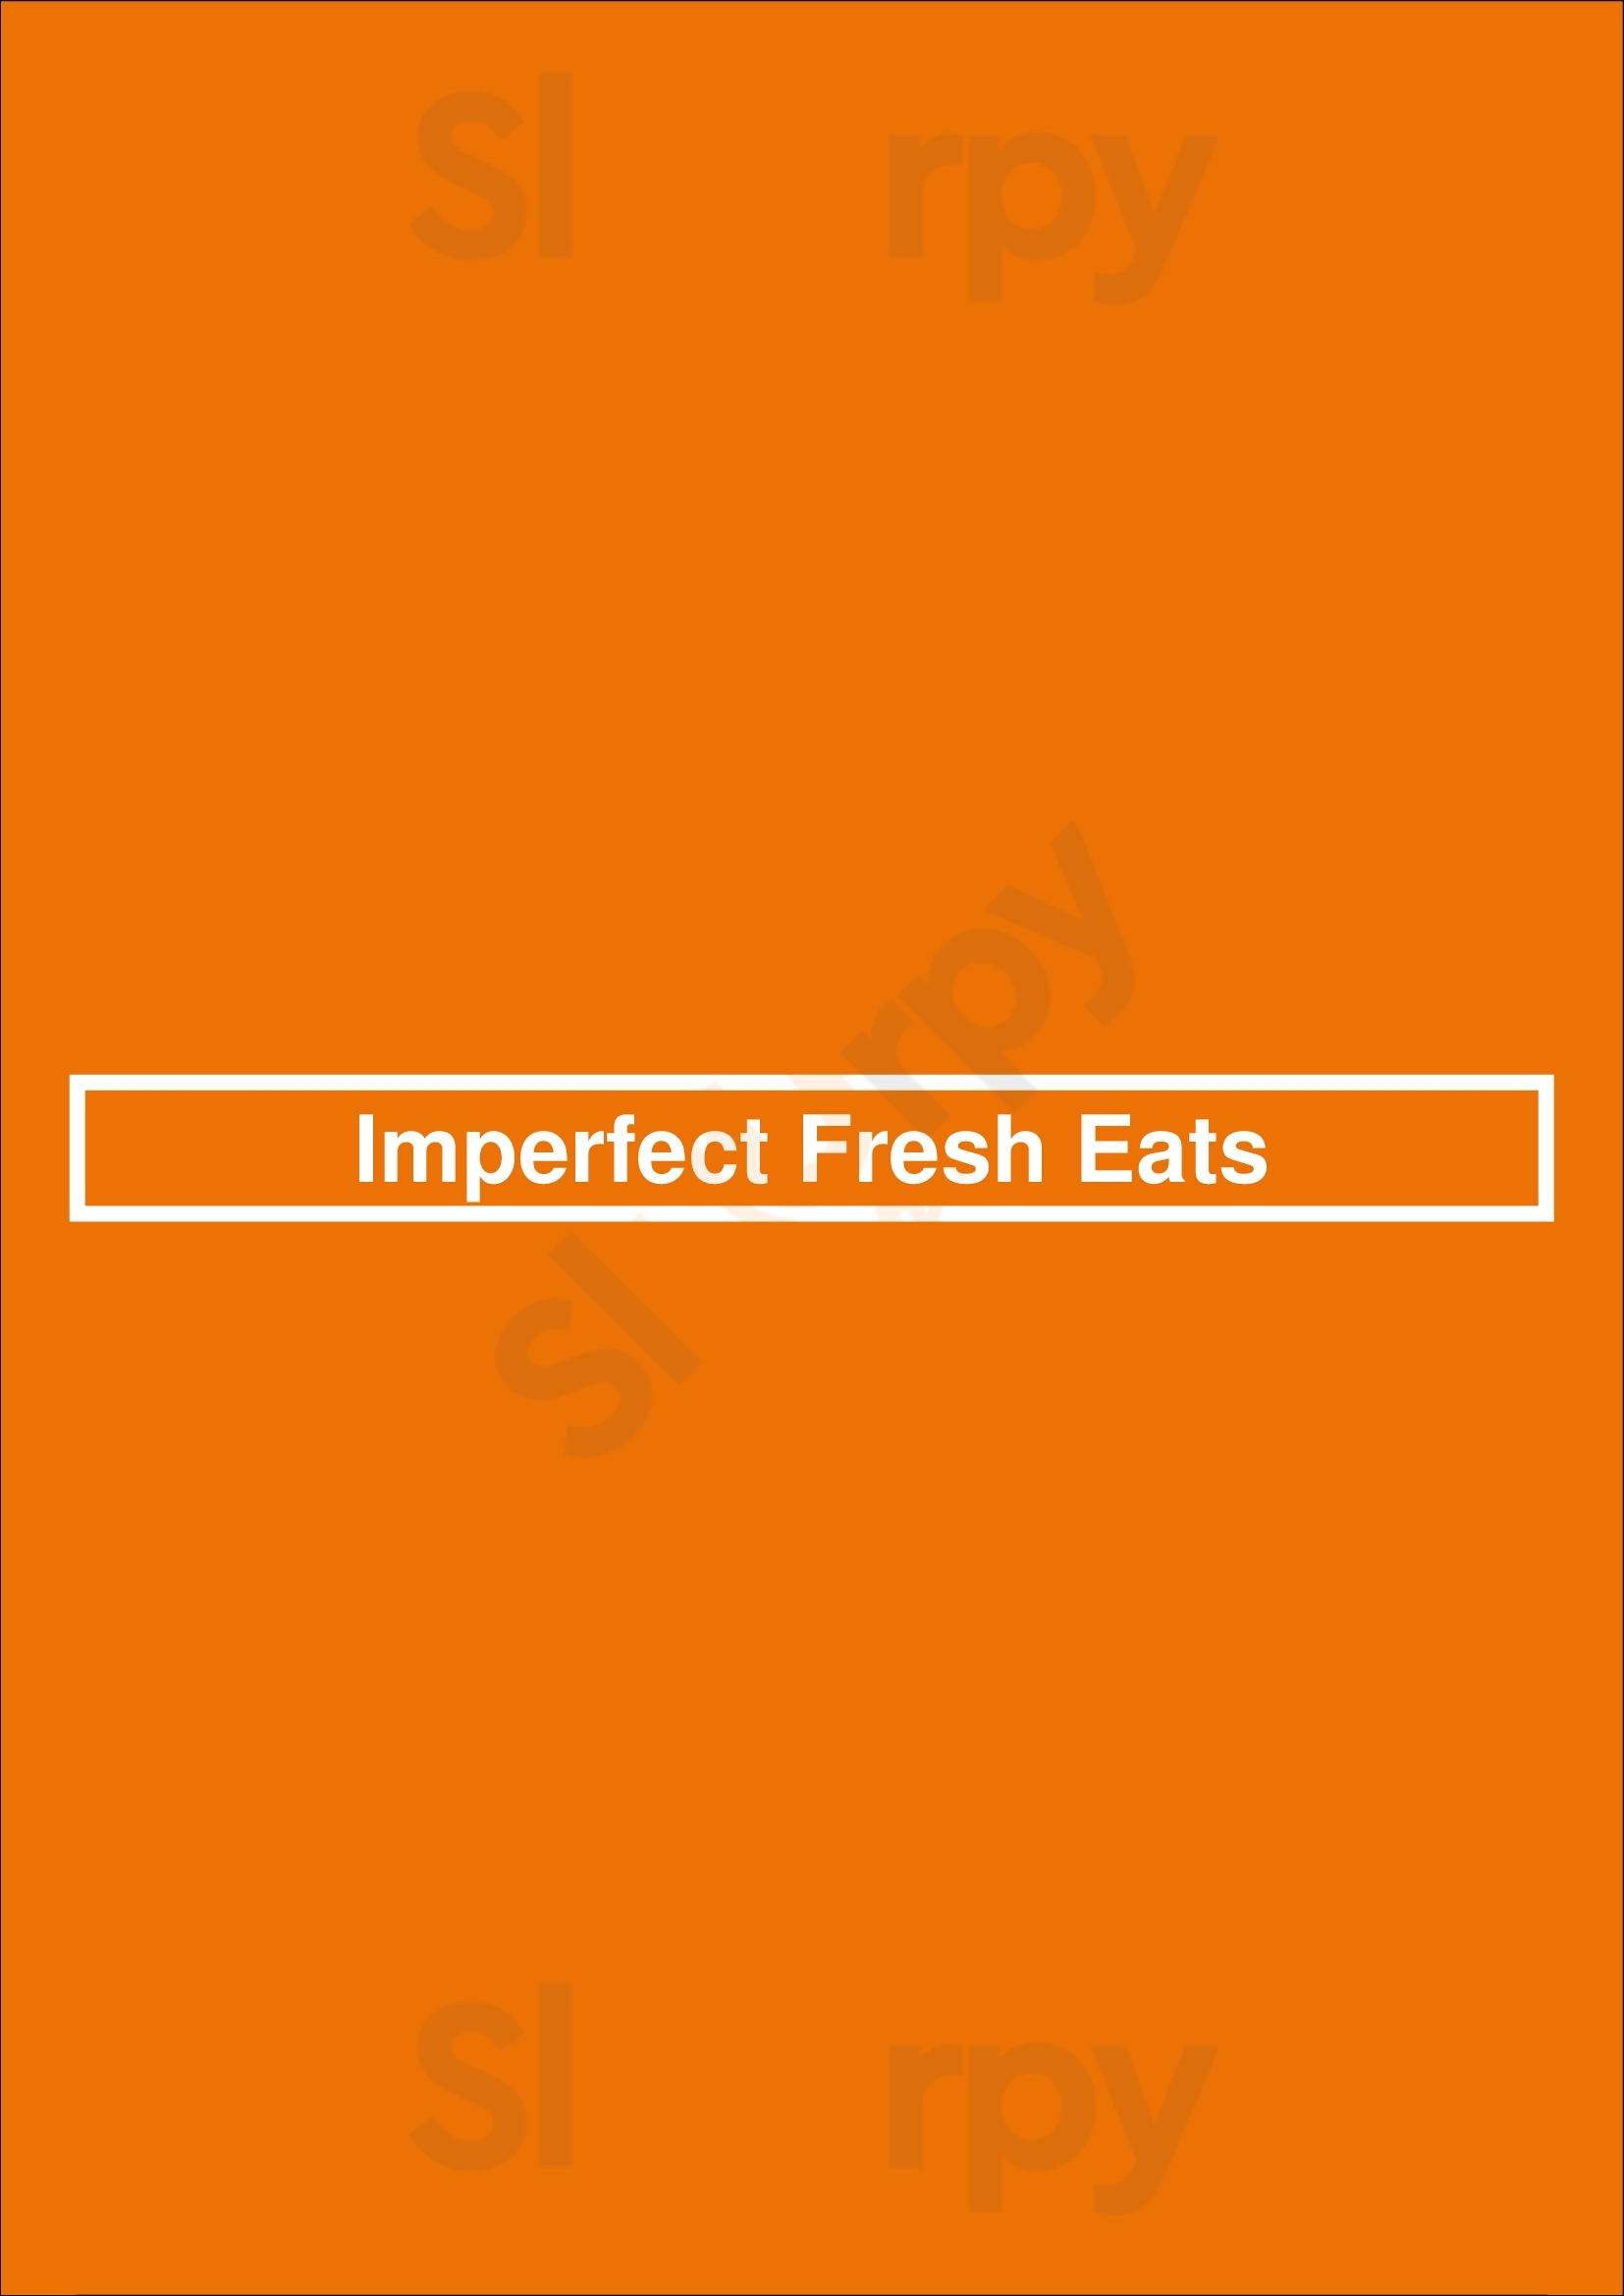 Imperfect Fresh Eats Toronto Menu - 1